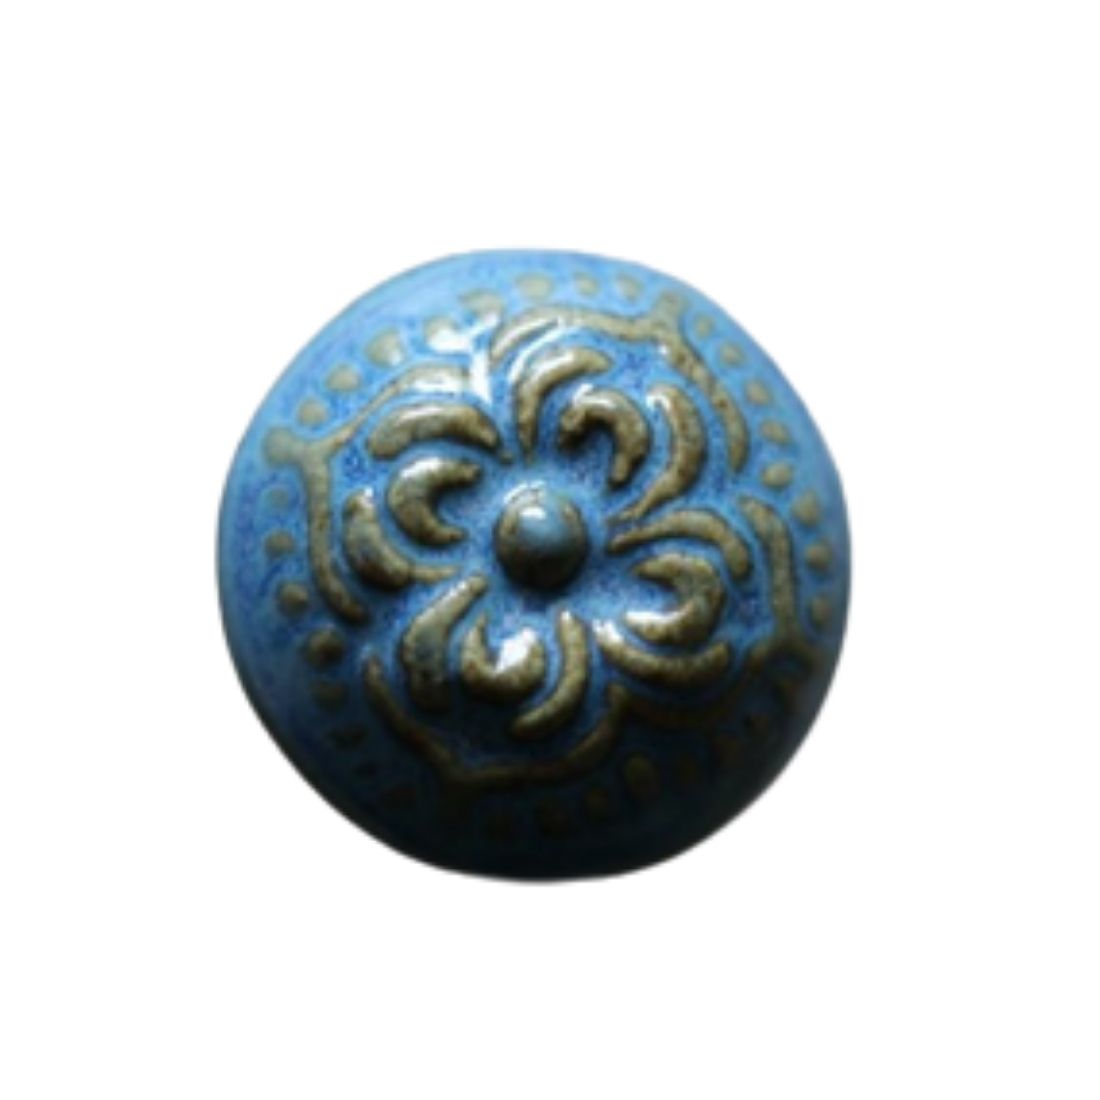 Ceramic Round Knob - Green and Blue Flower Pattern